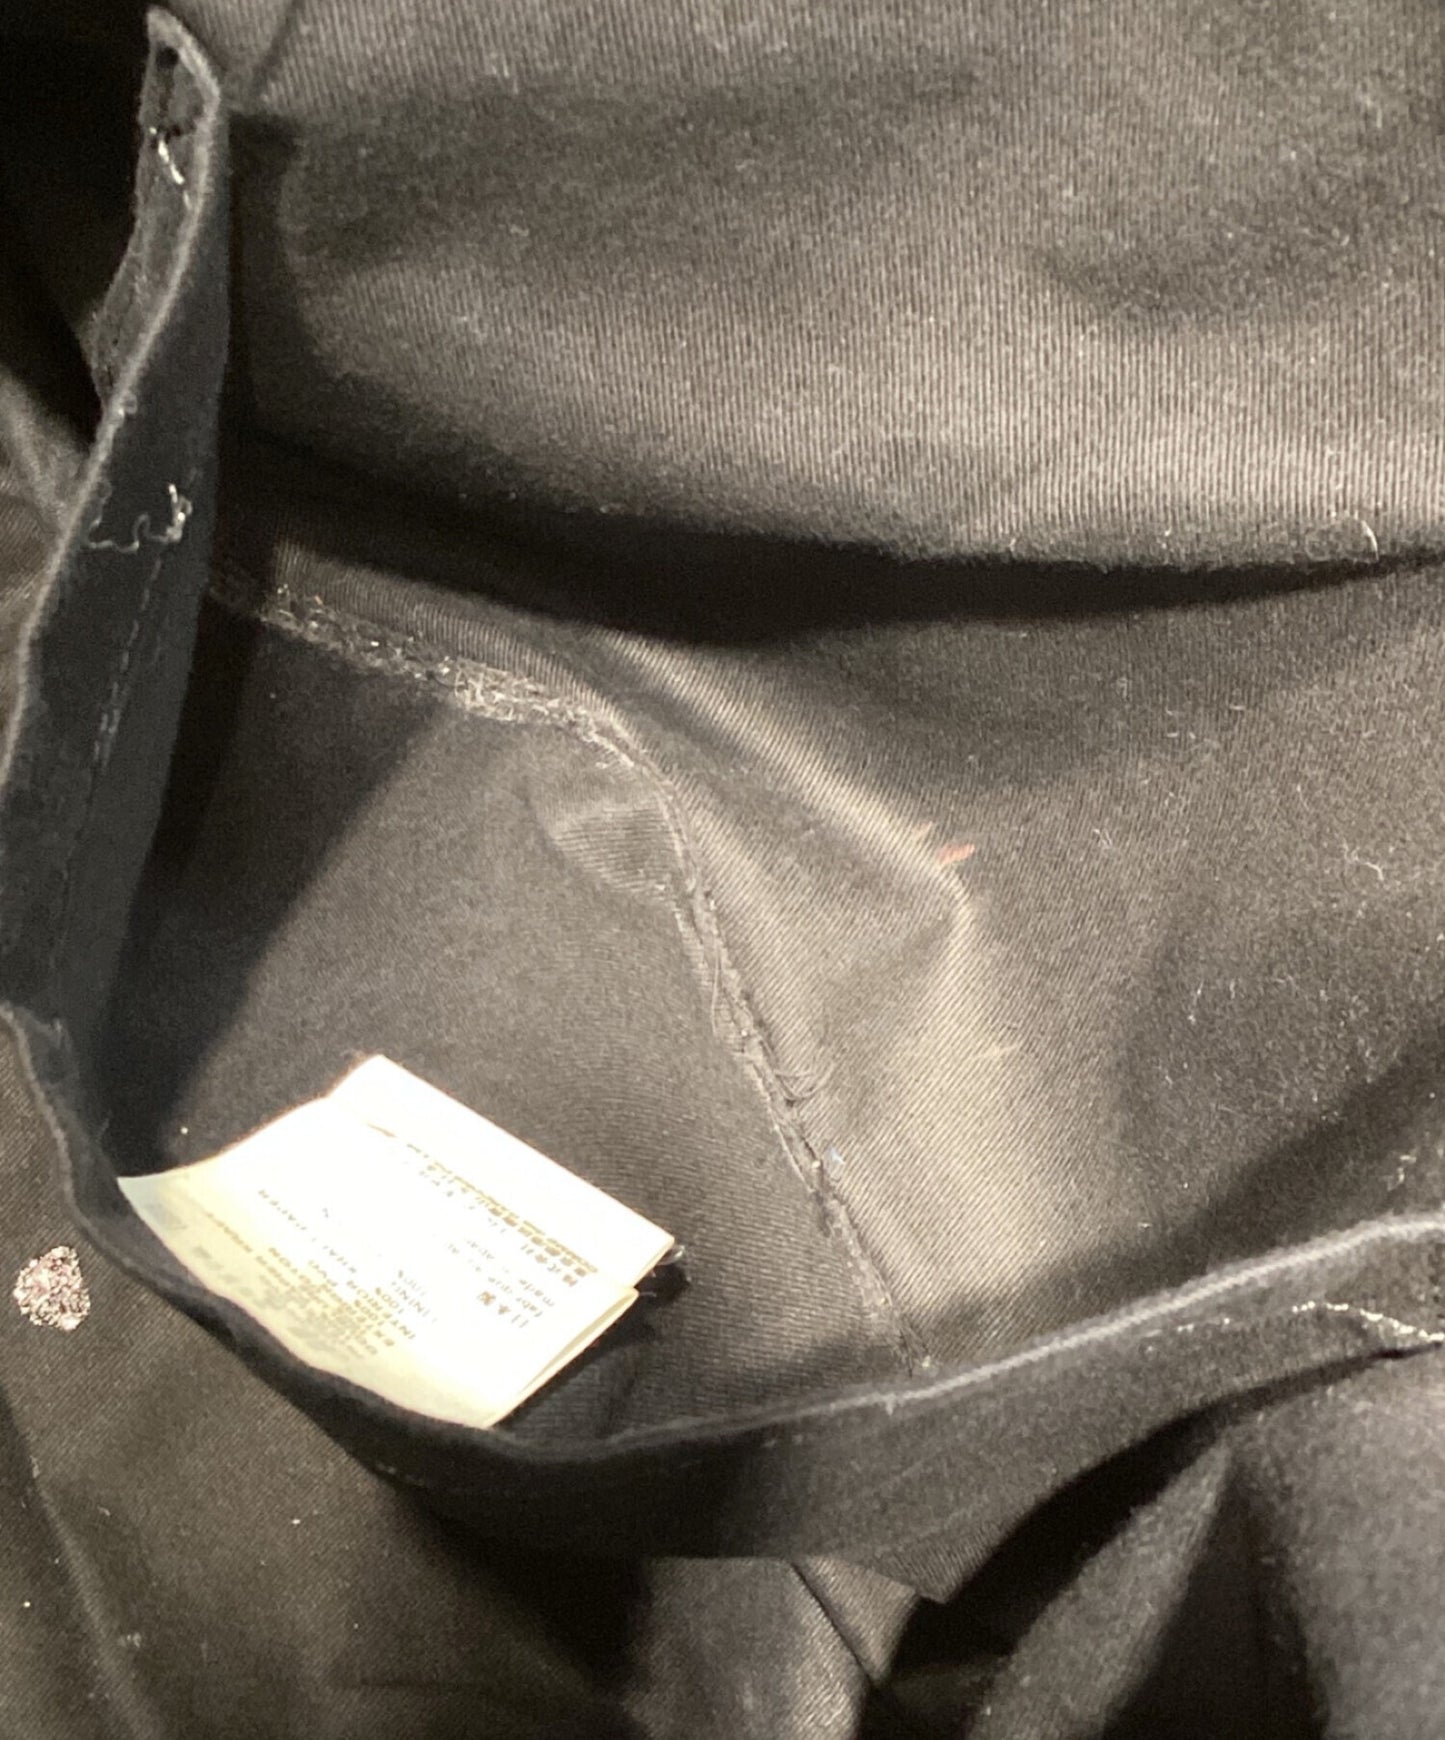 [Pre-owned] COMME des GARCONS PVC Tote Bag OS-K 208